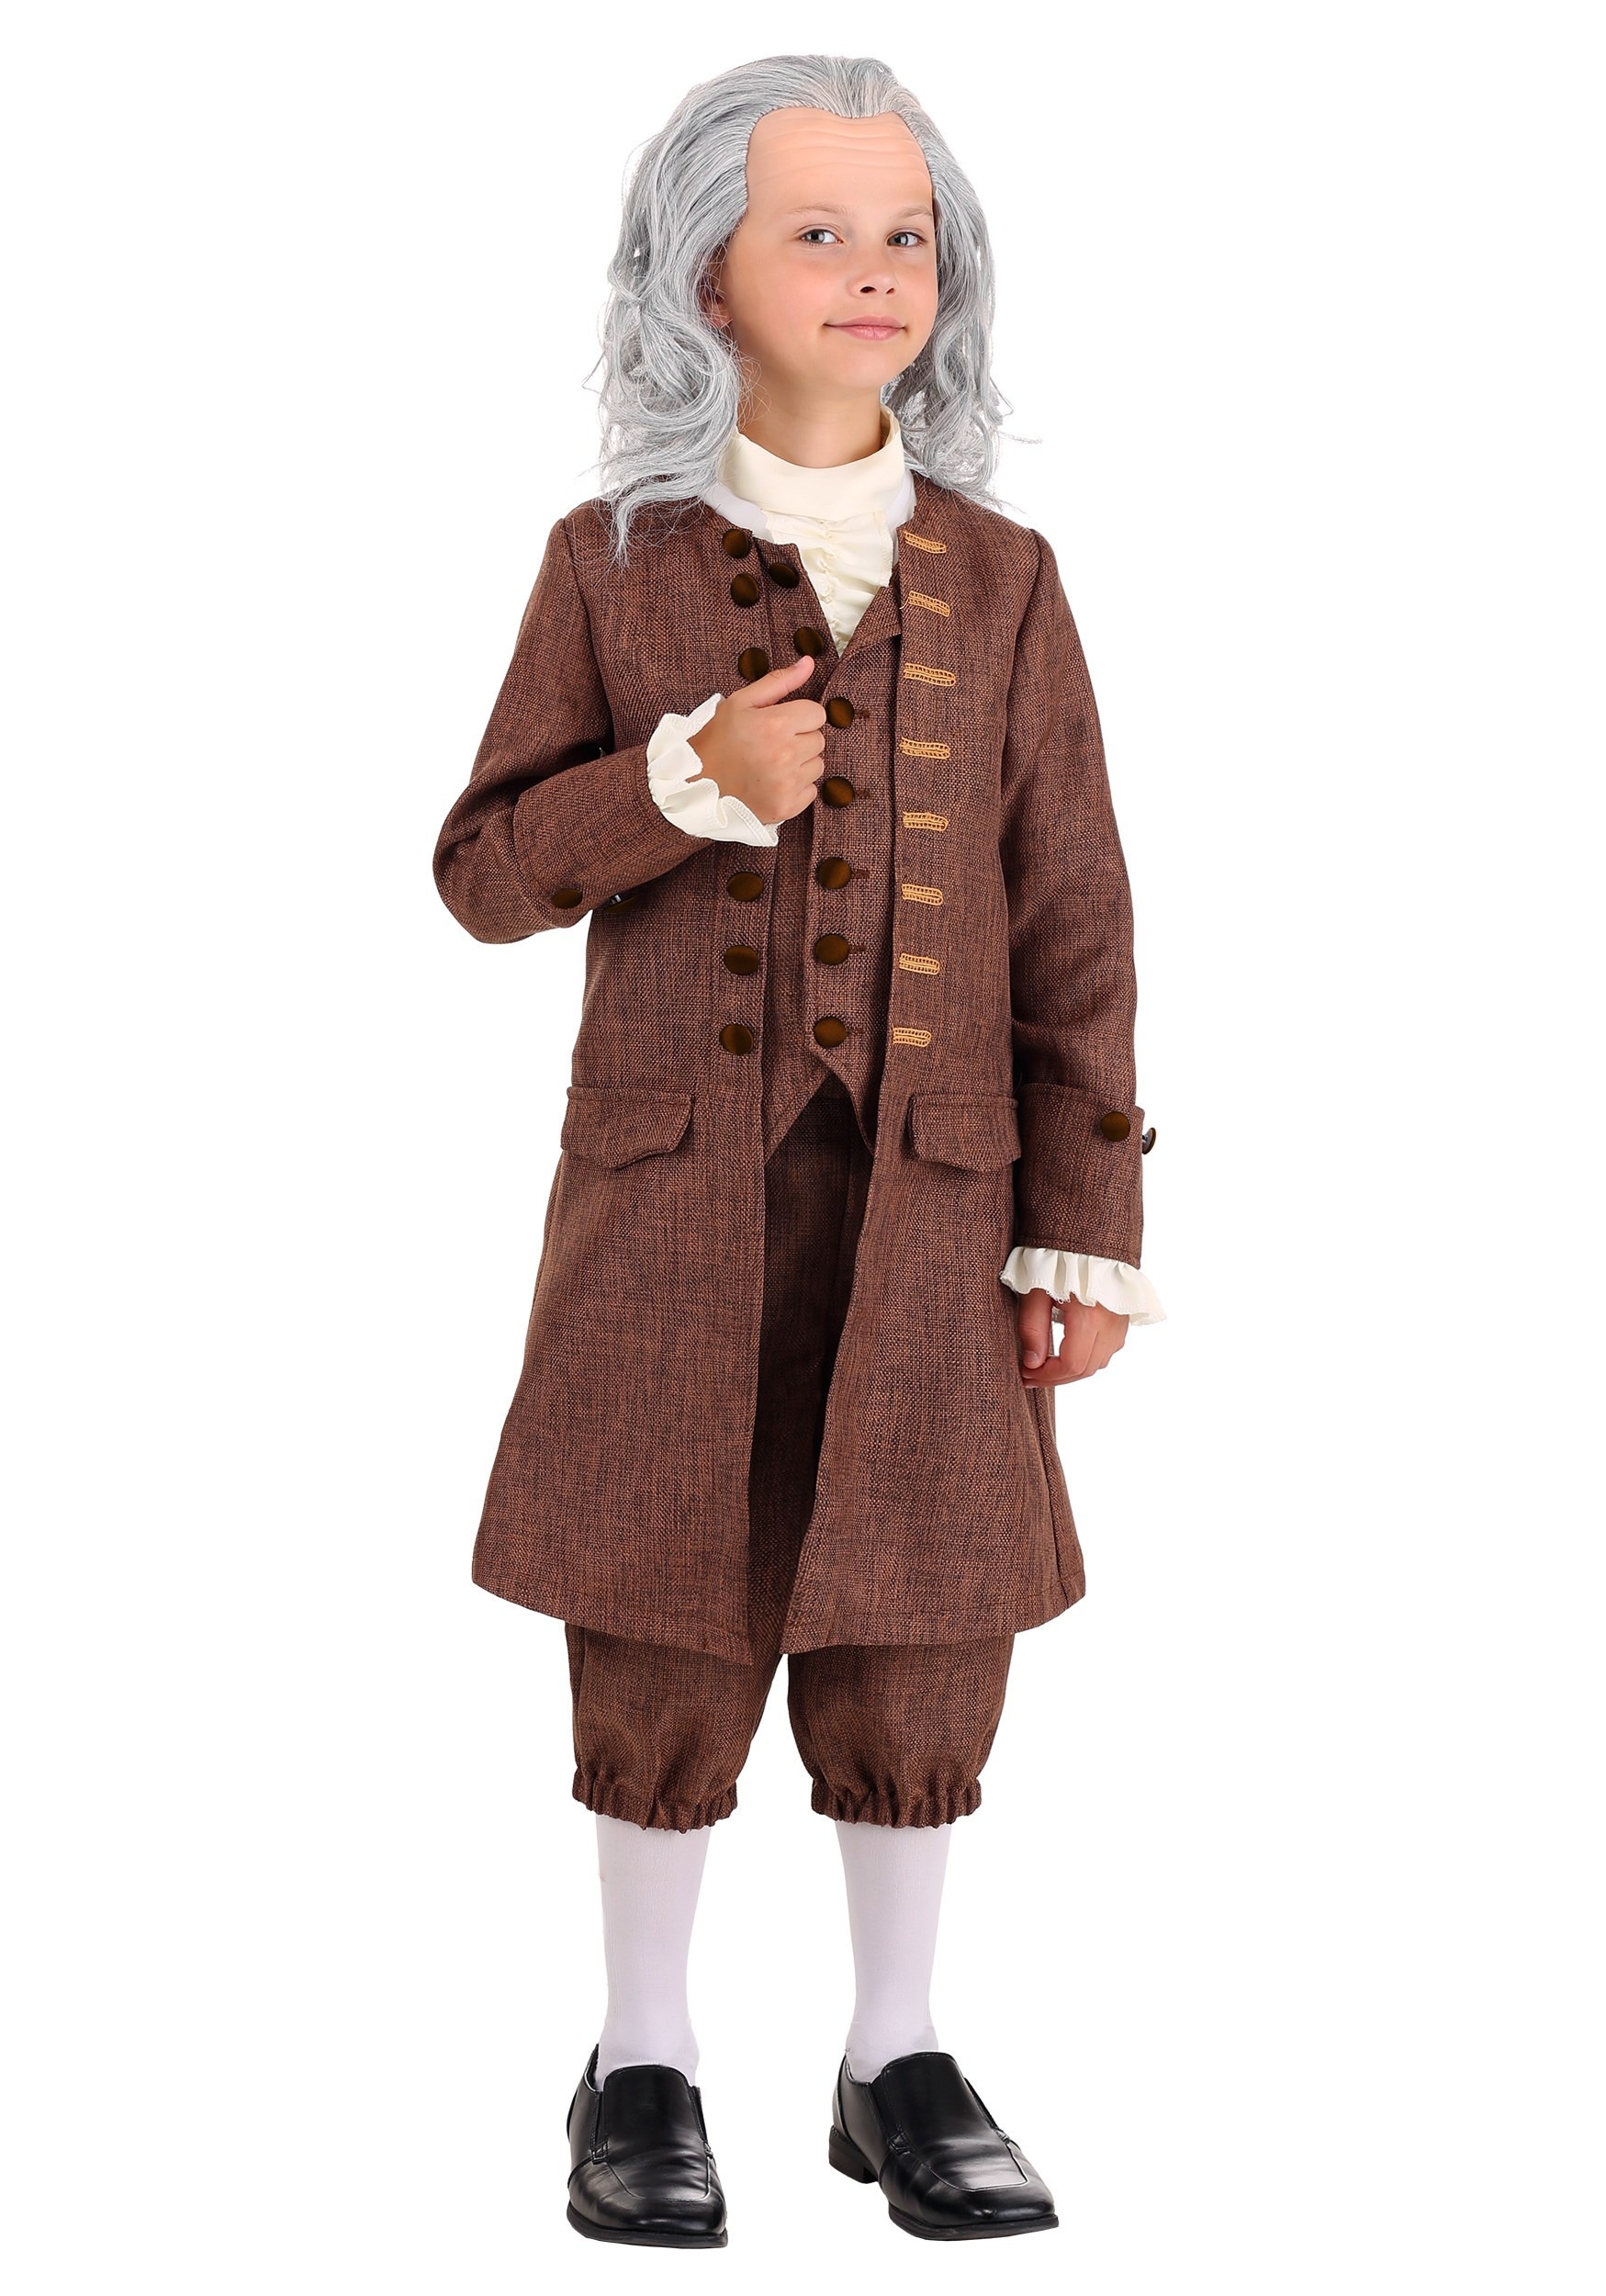 Colonial Benjamin Franklin Costume For Boy's